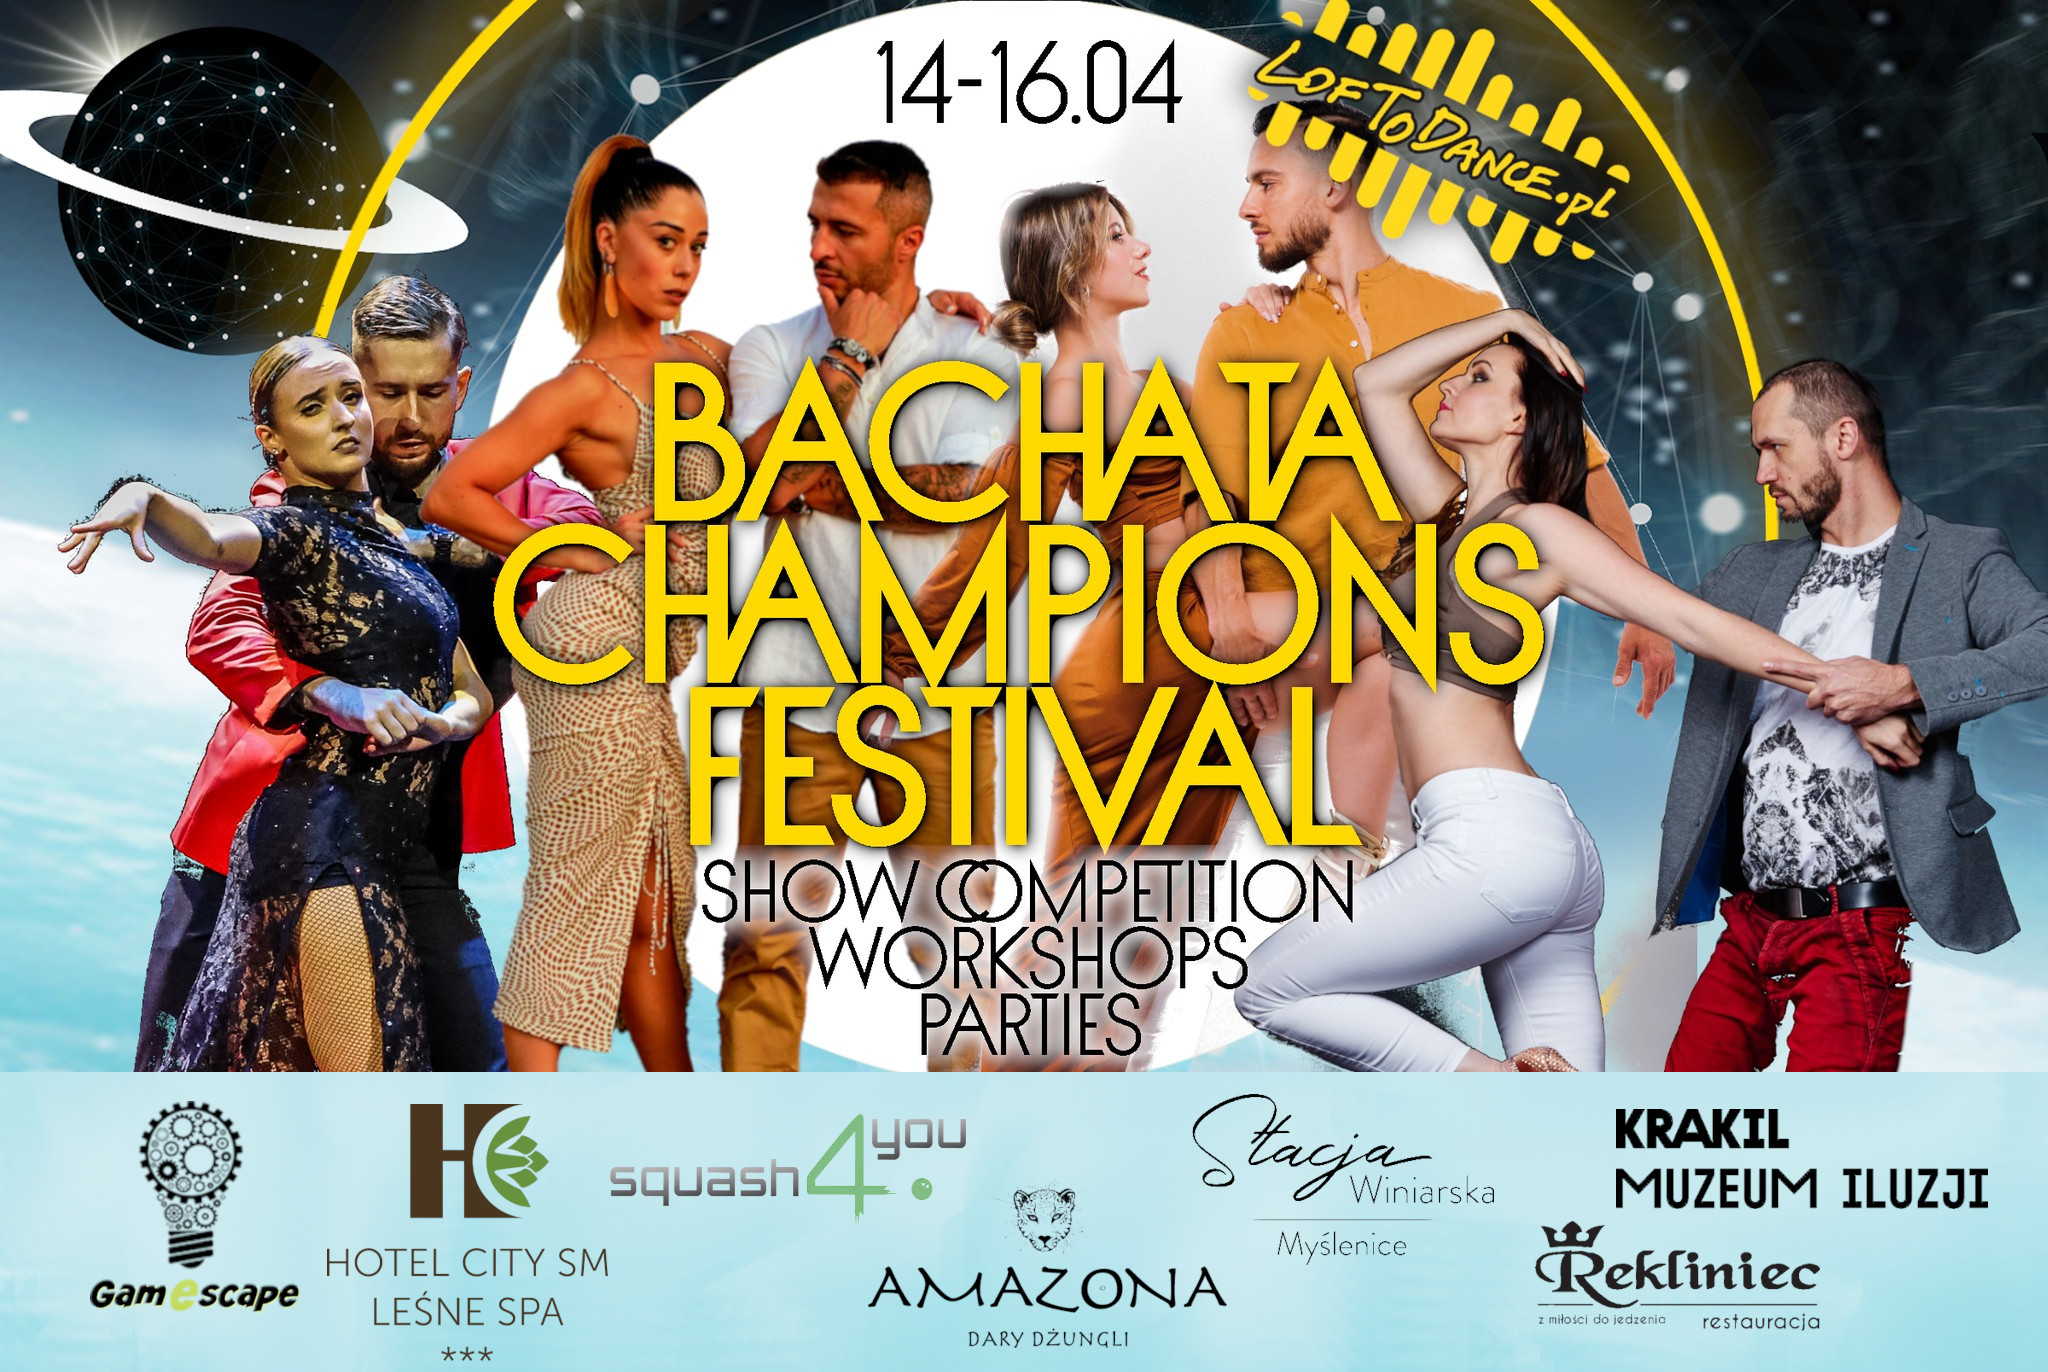 Bachata Champions Festival